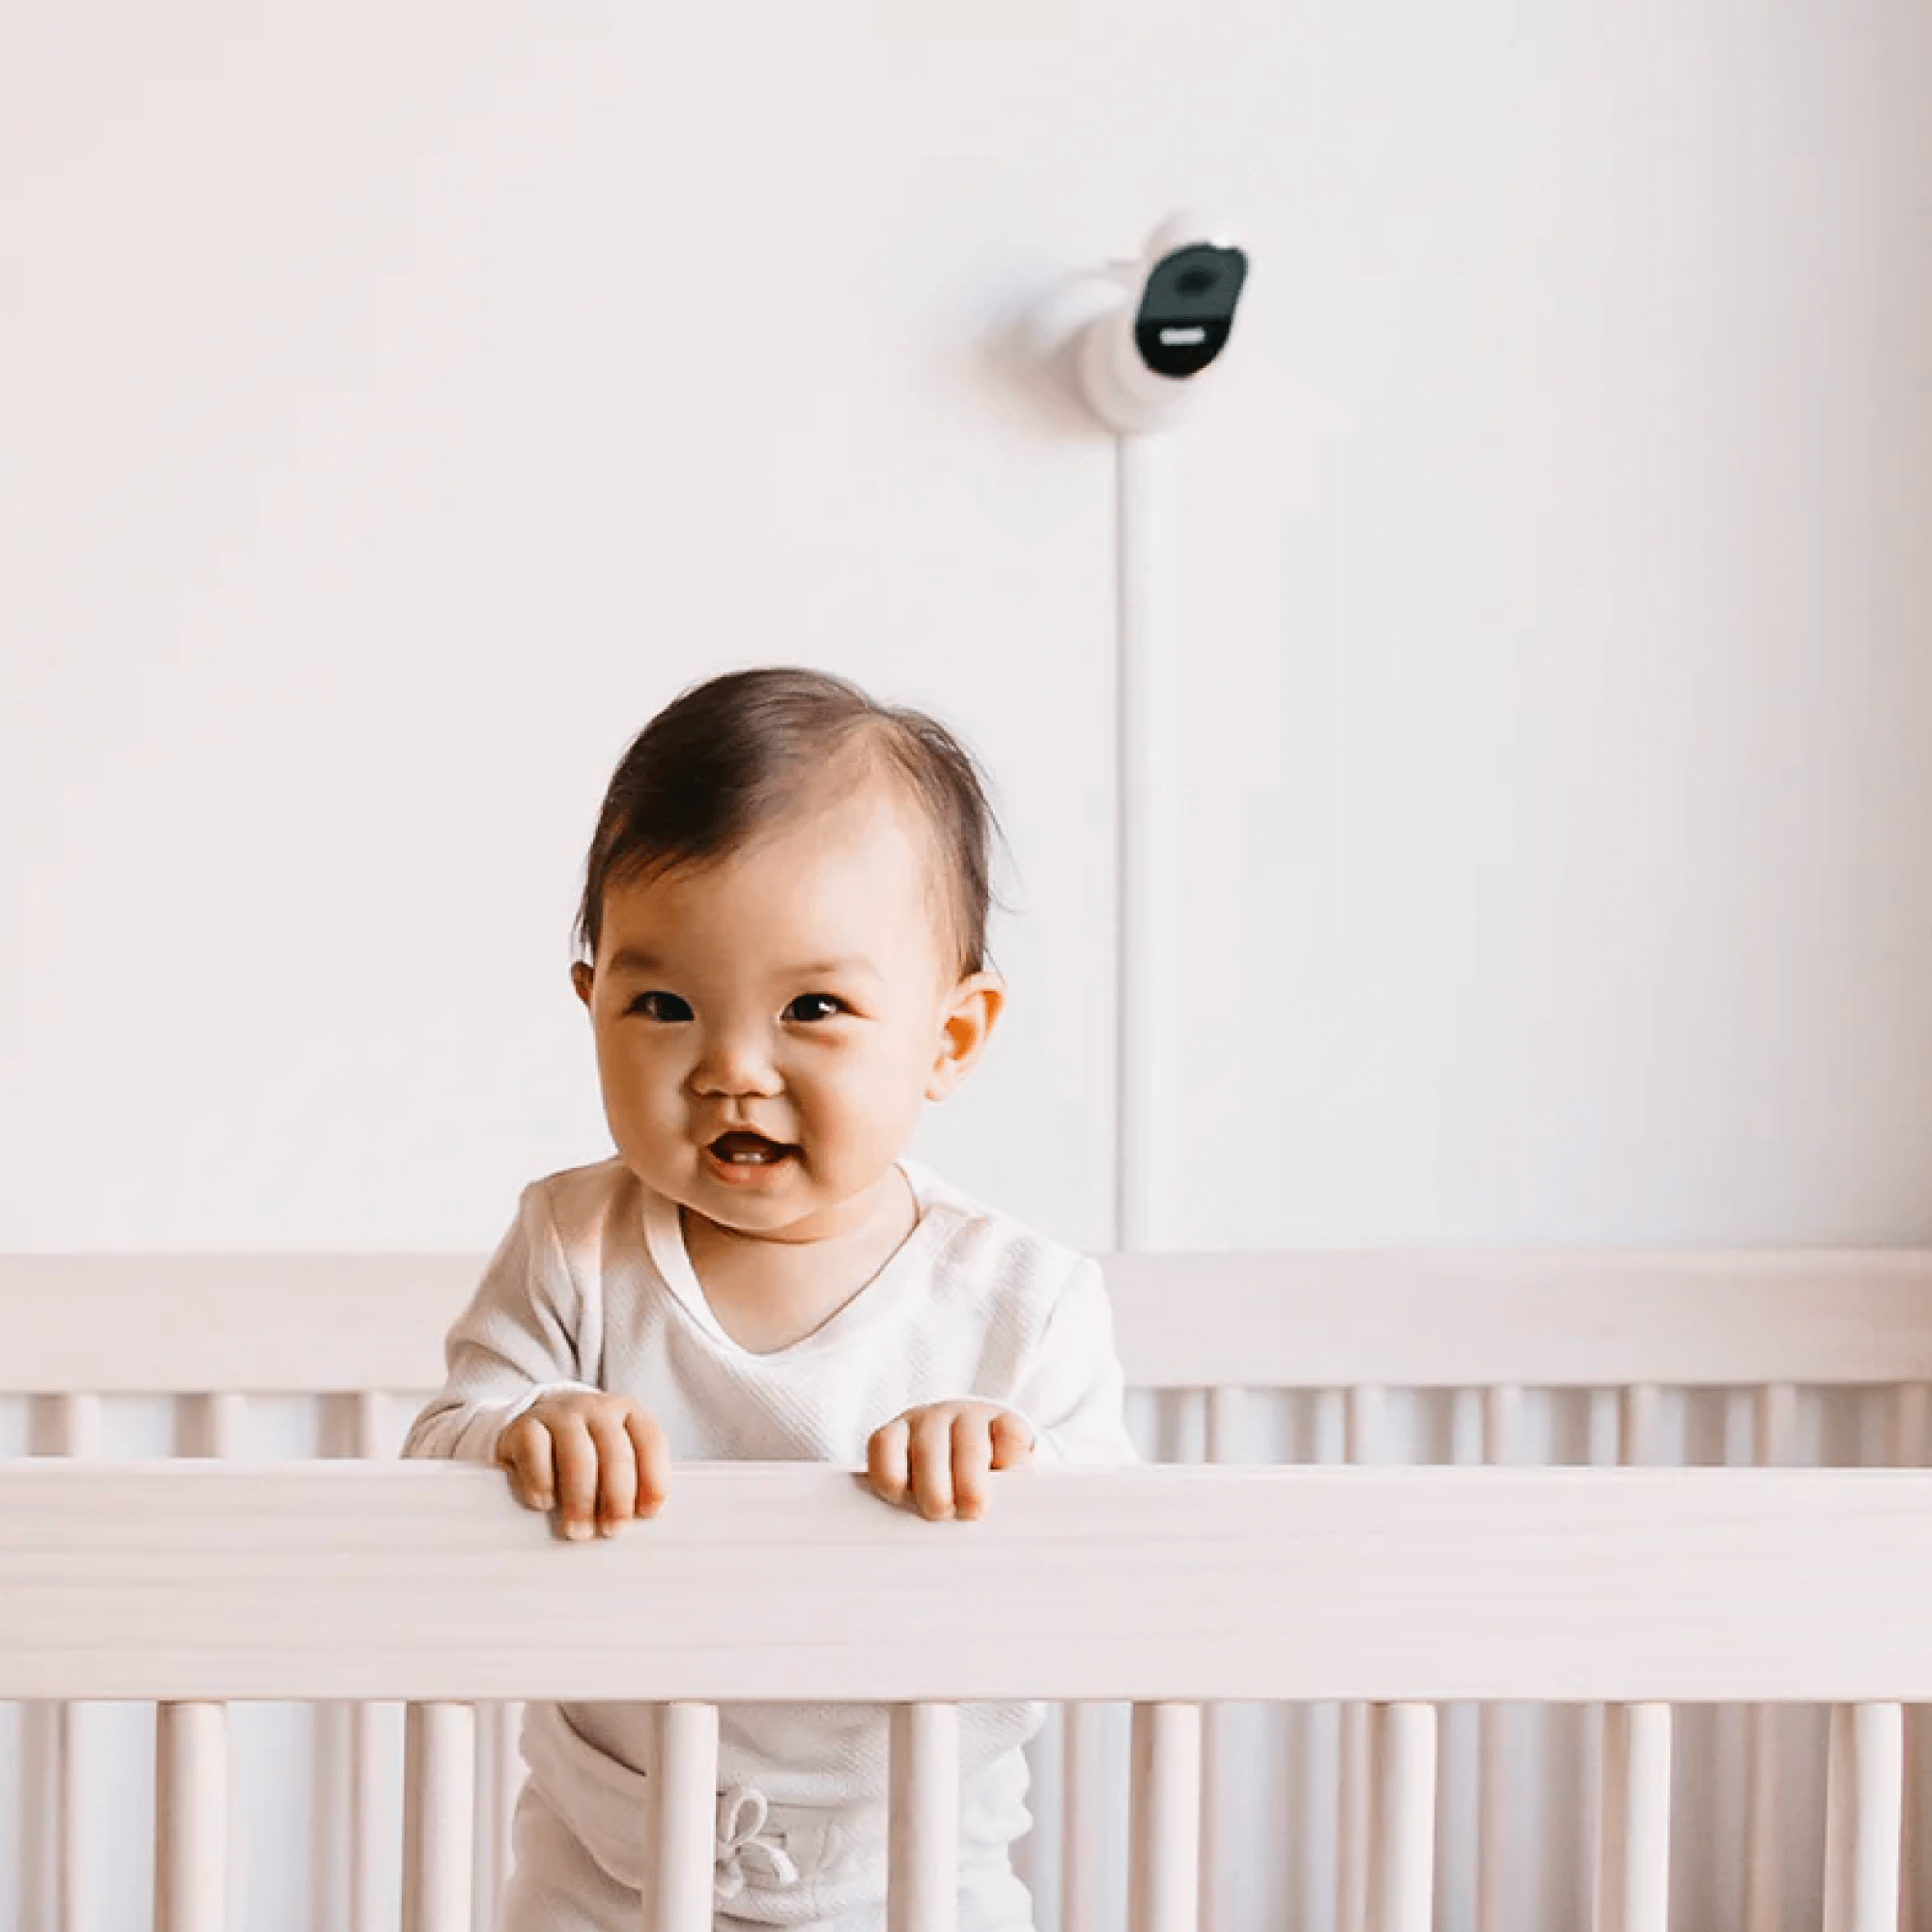 Owlet Cam WiFi Video Baby Monitor – Crib & Kids